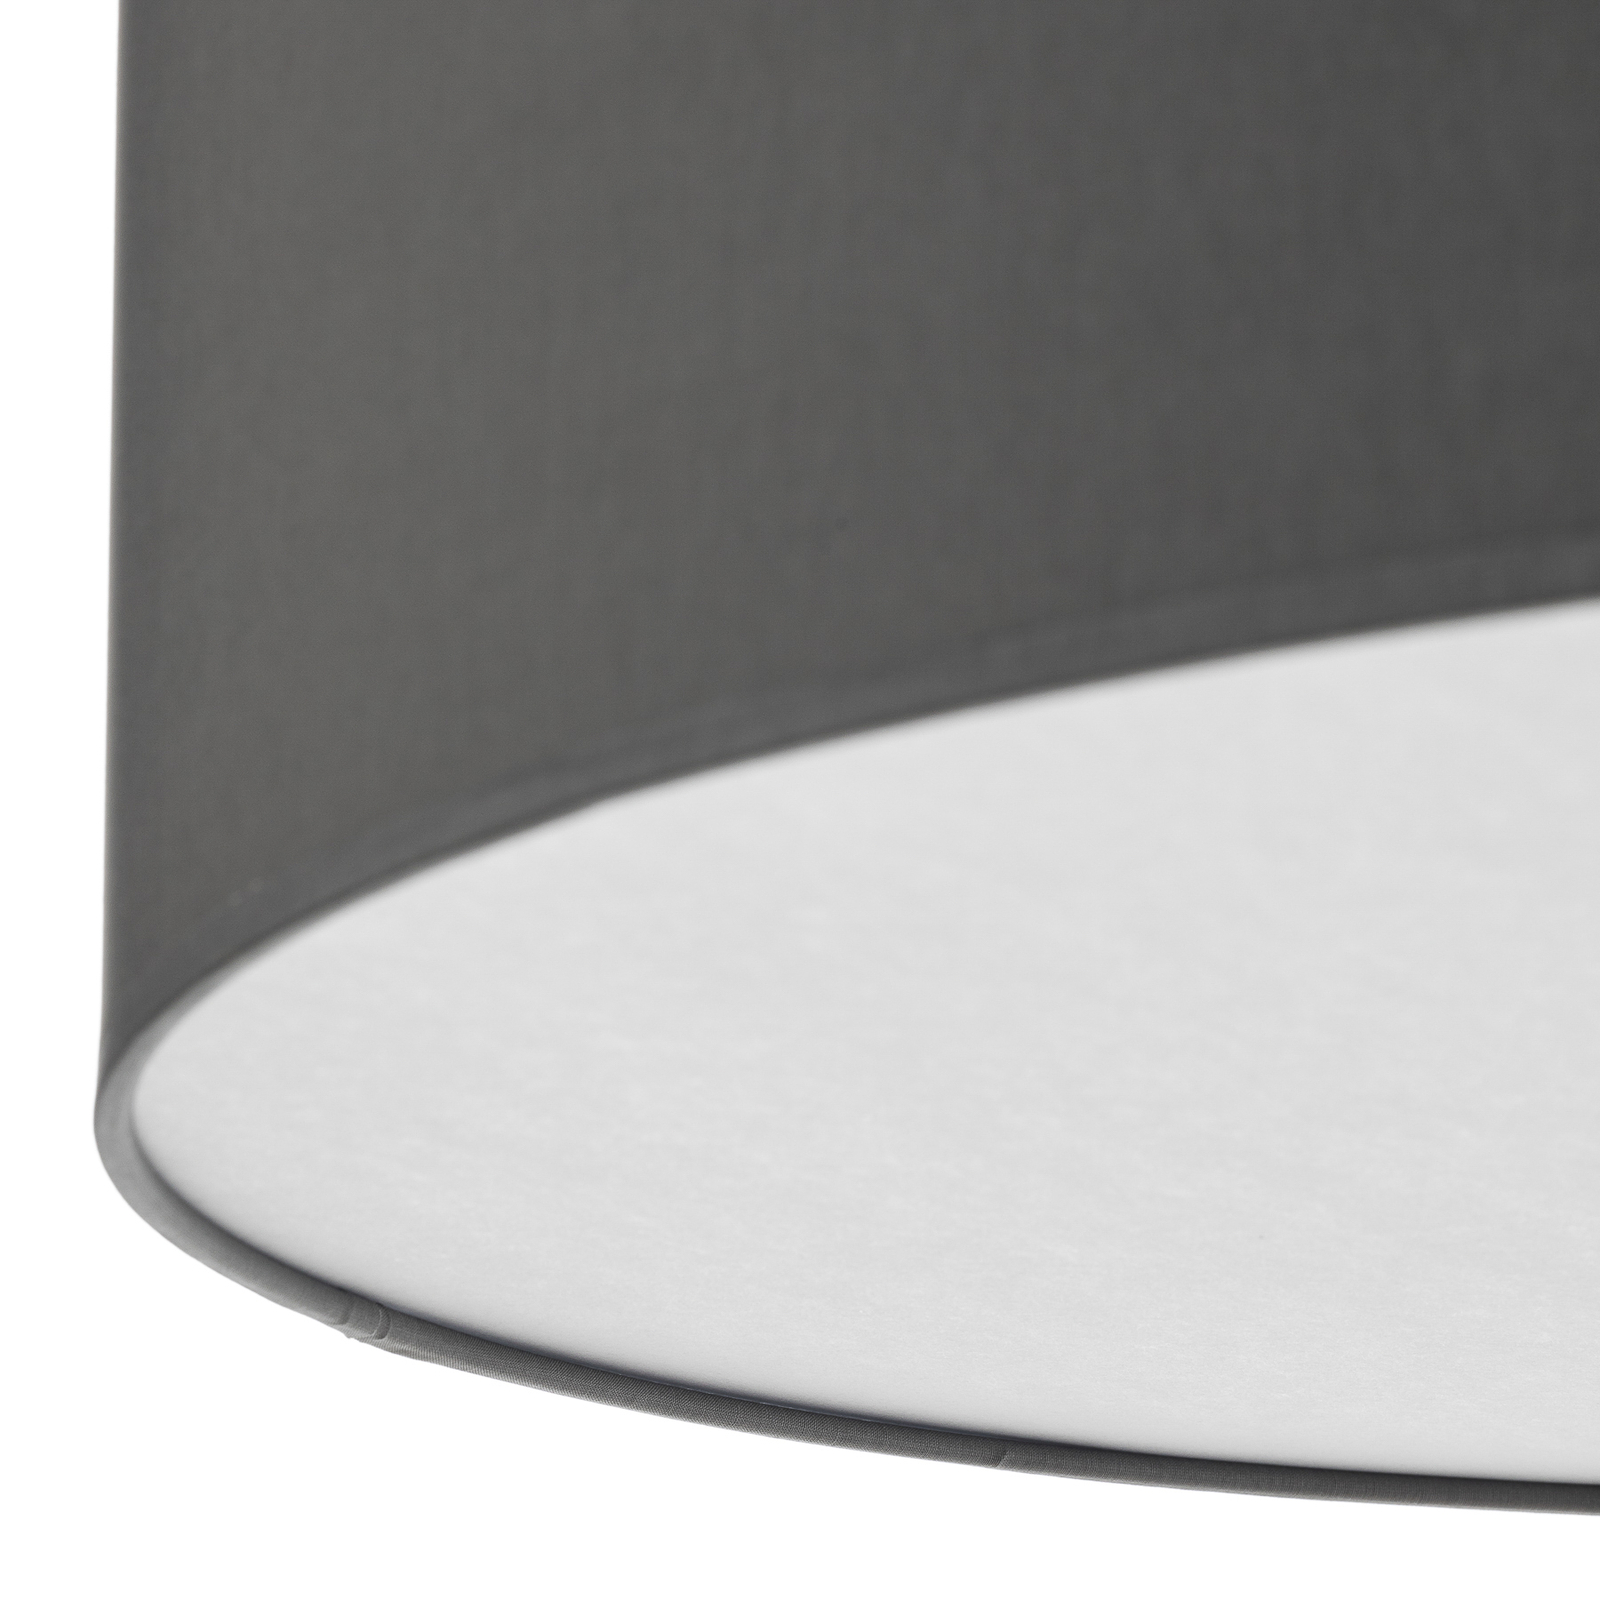 Rondo semi-flush ceiling light, grey Ø 60cm